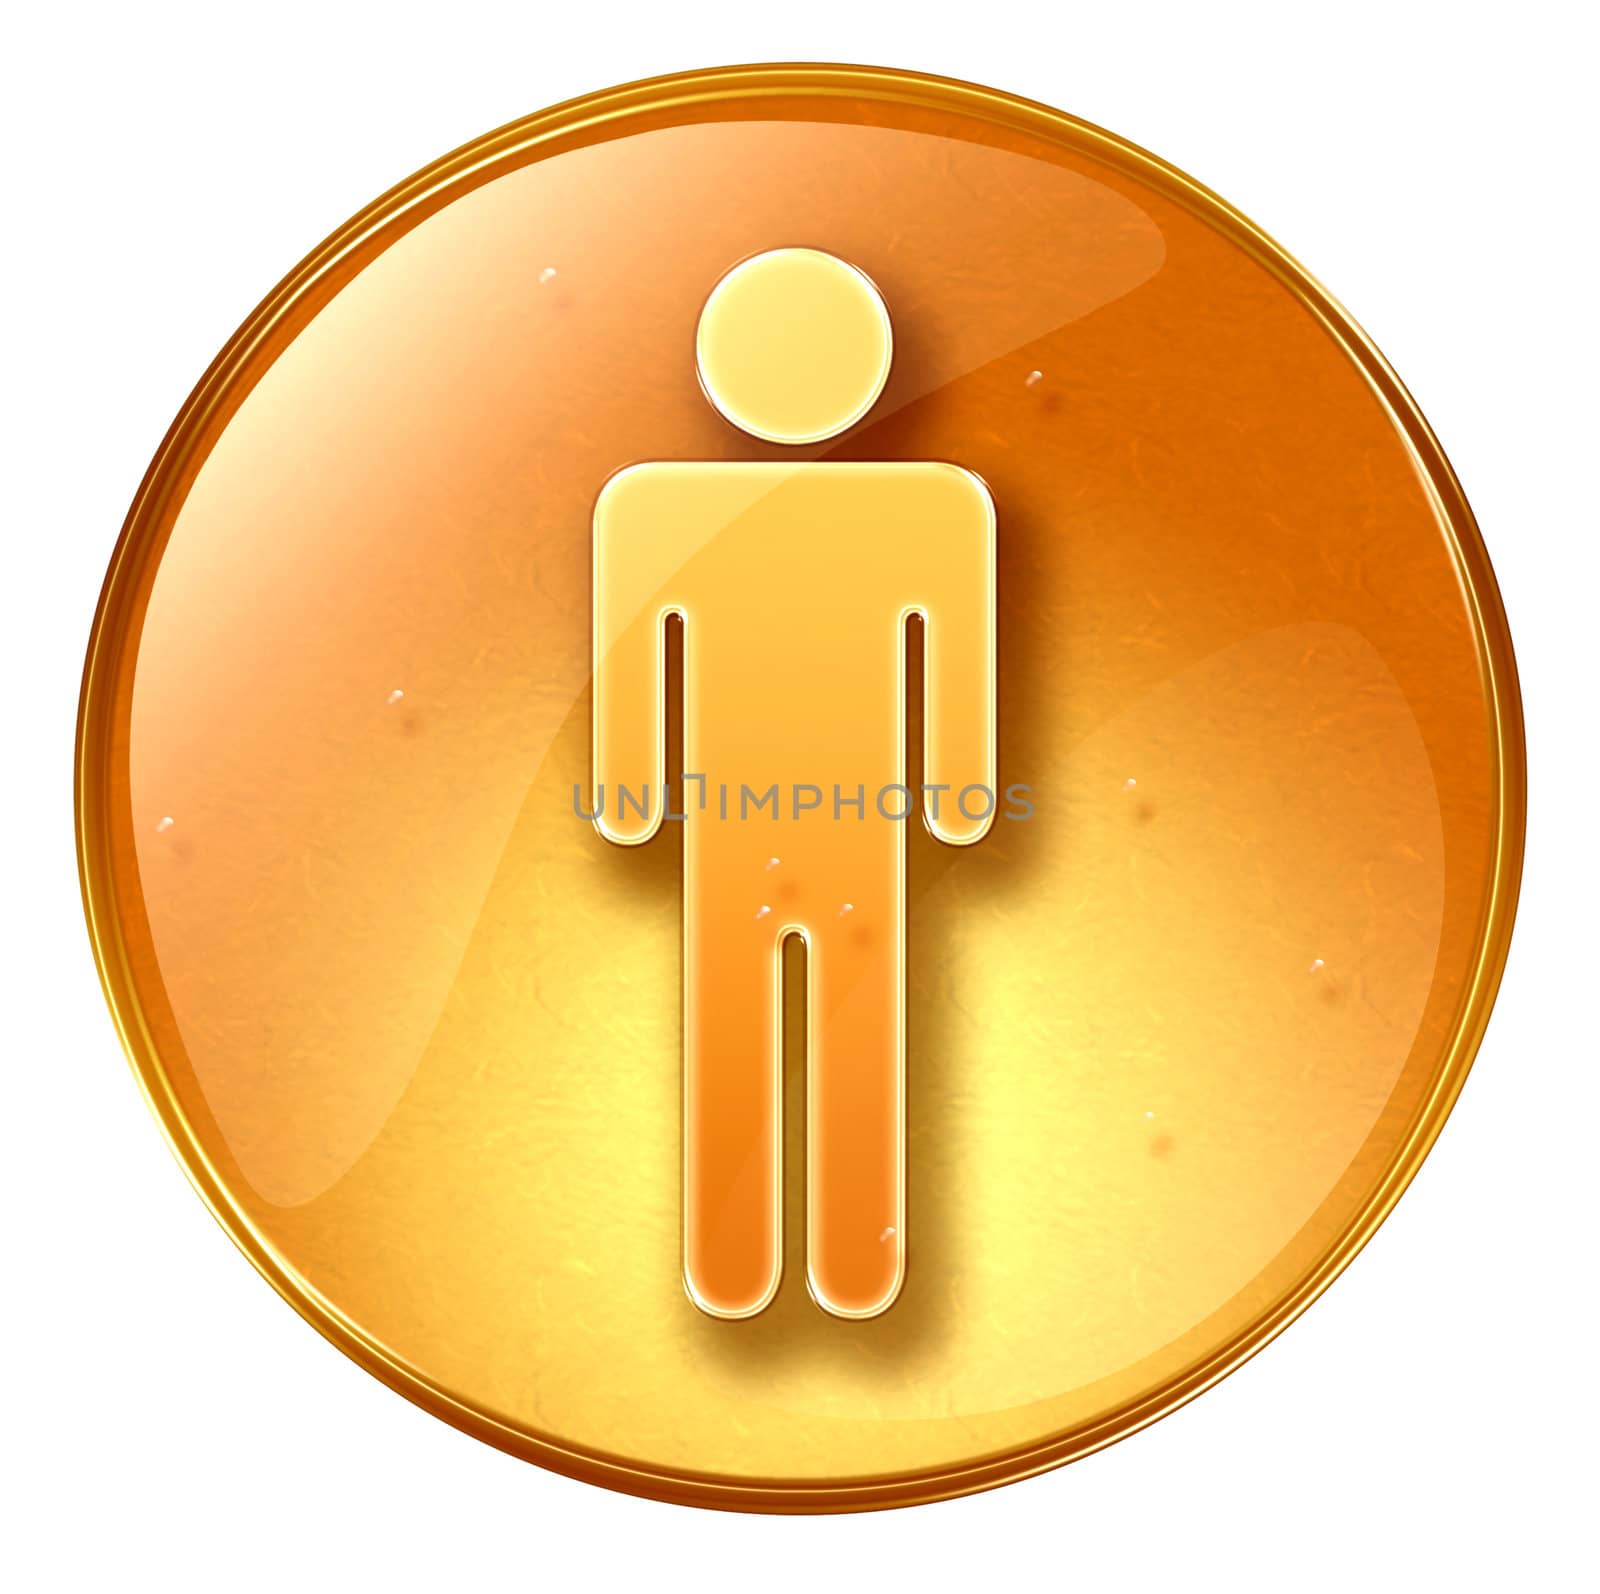 men icon yellow, isolated on white background.

